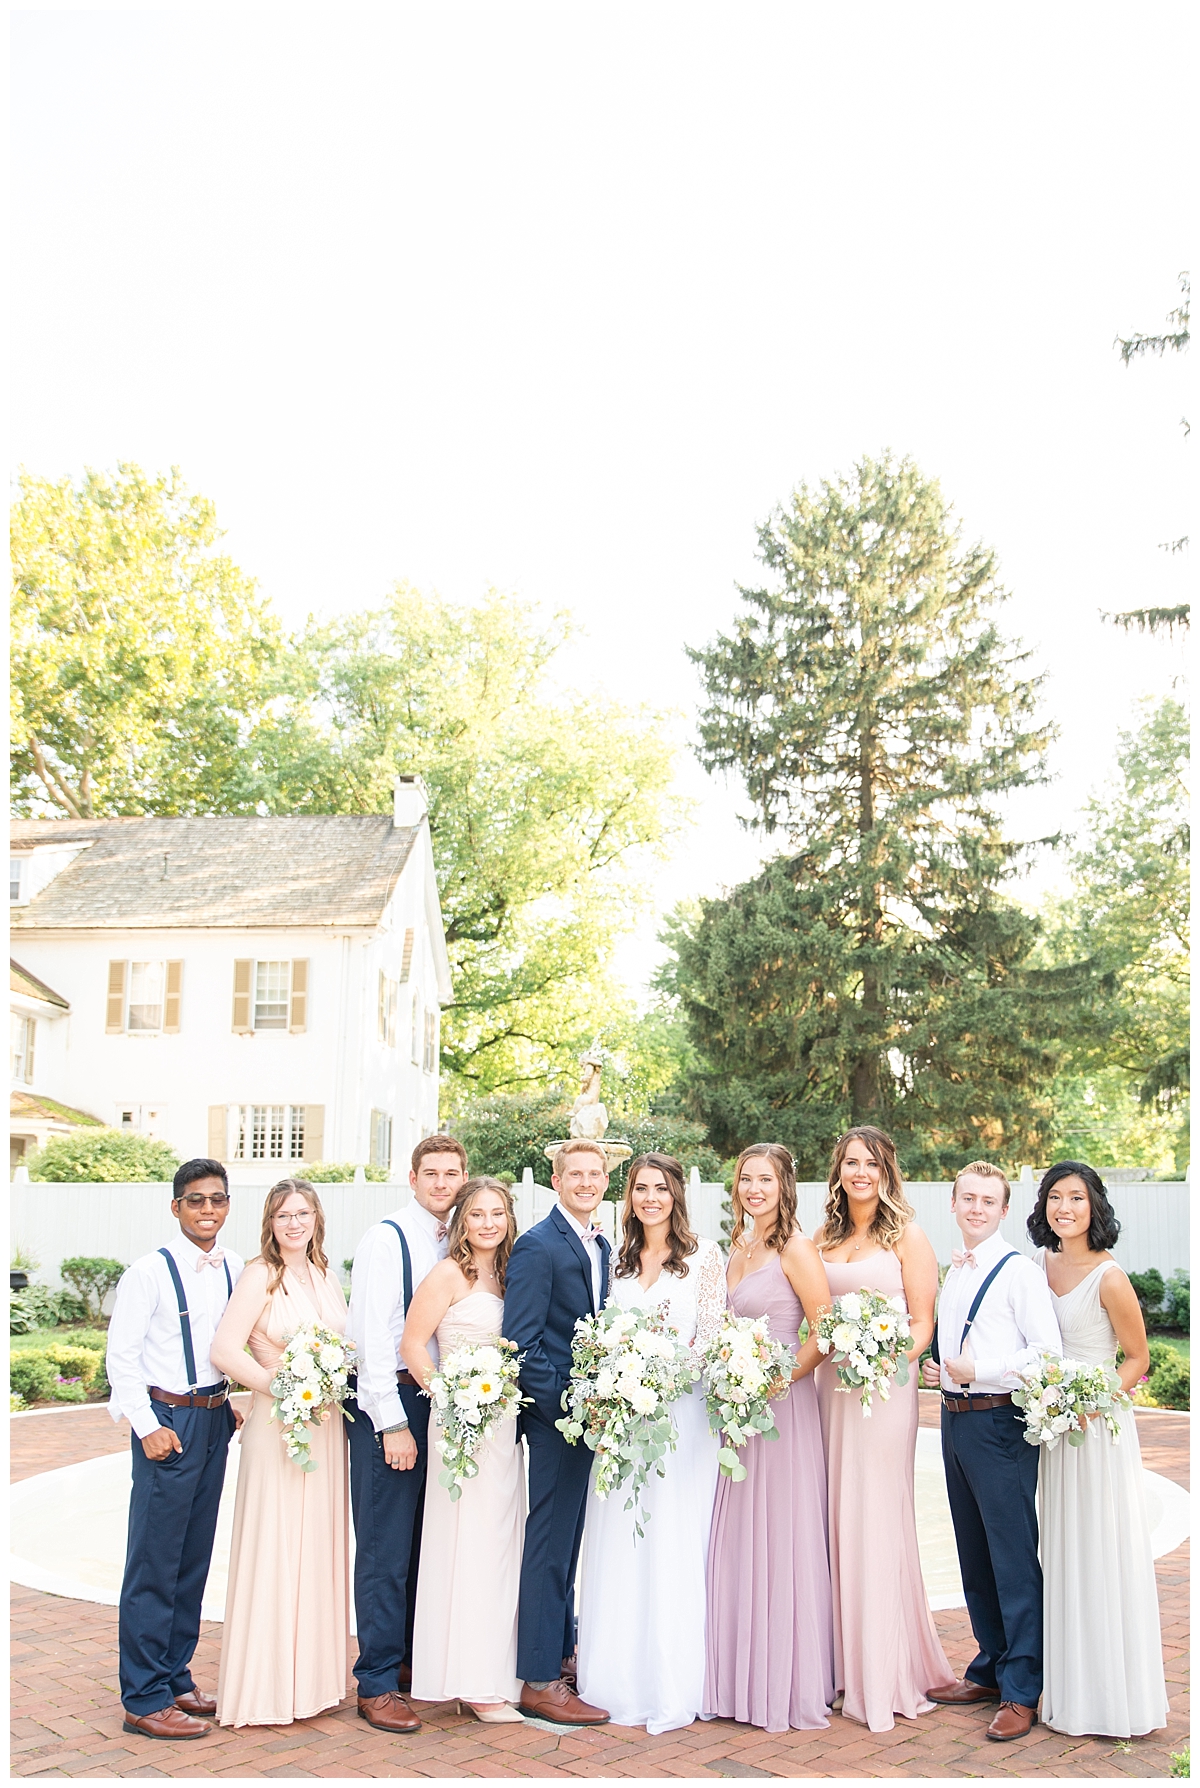 Family Formal Photos at White Chimneys Wedding Venue Gap, PA